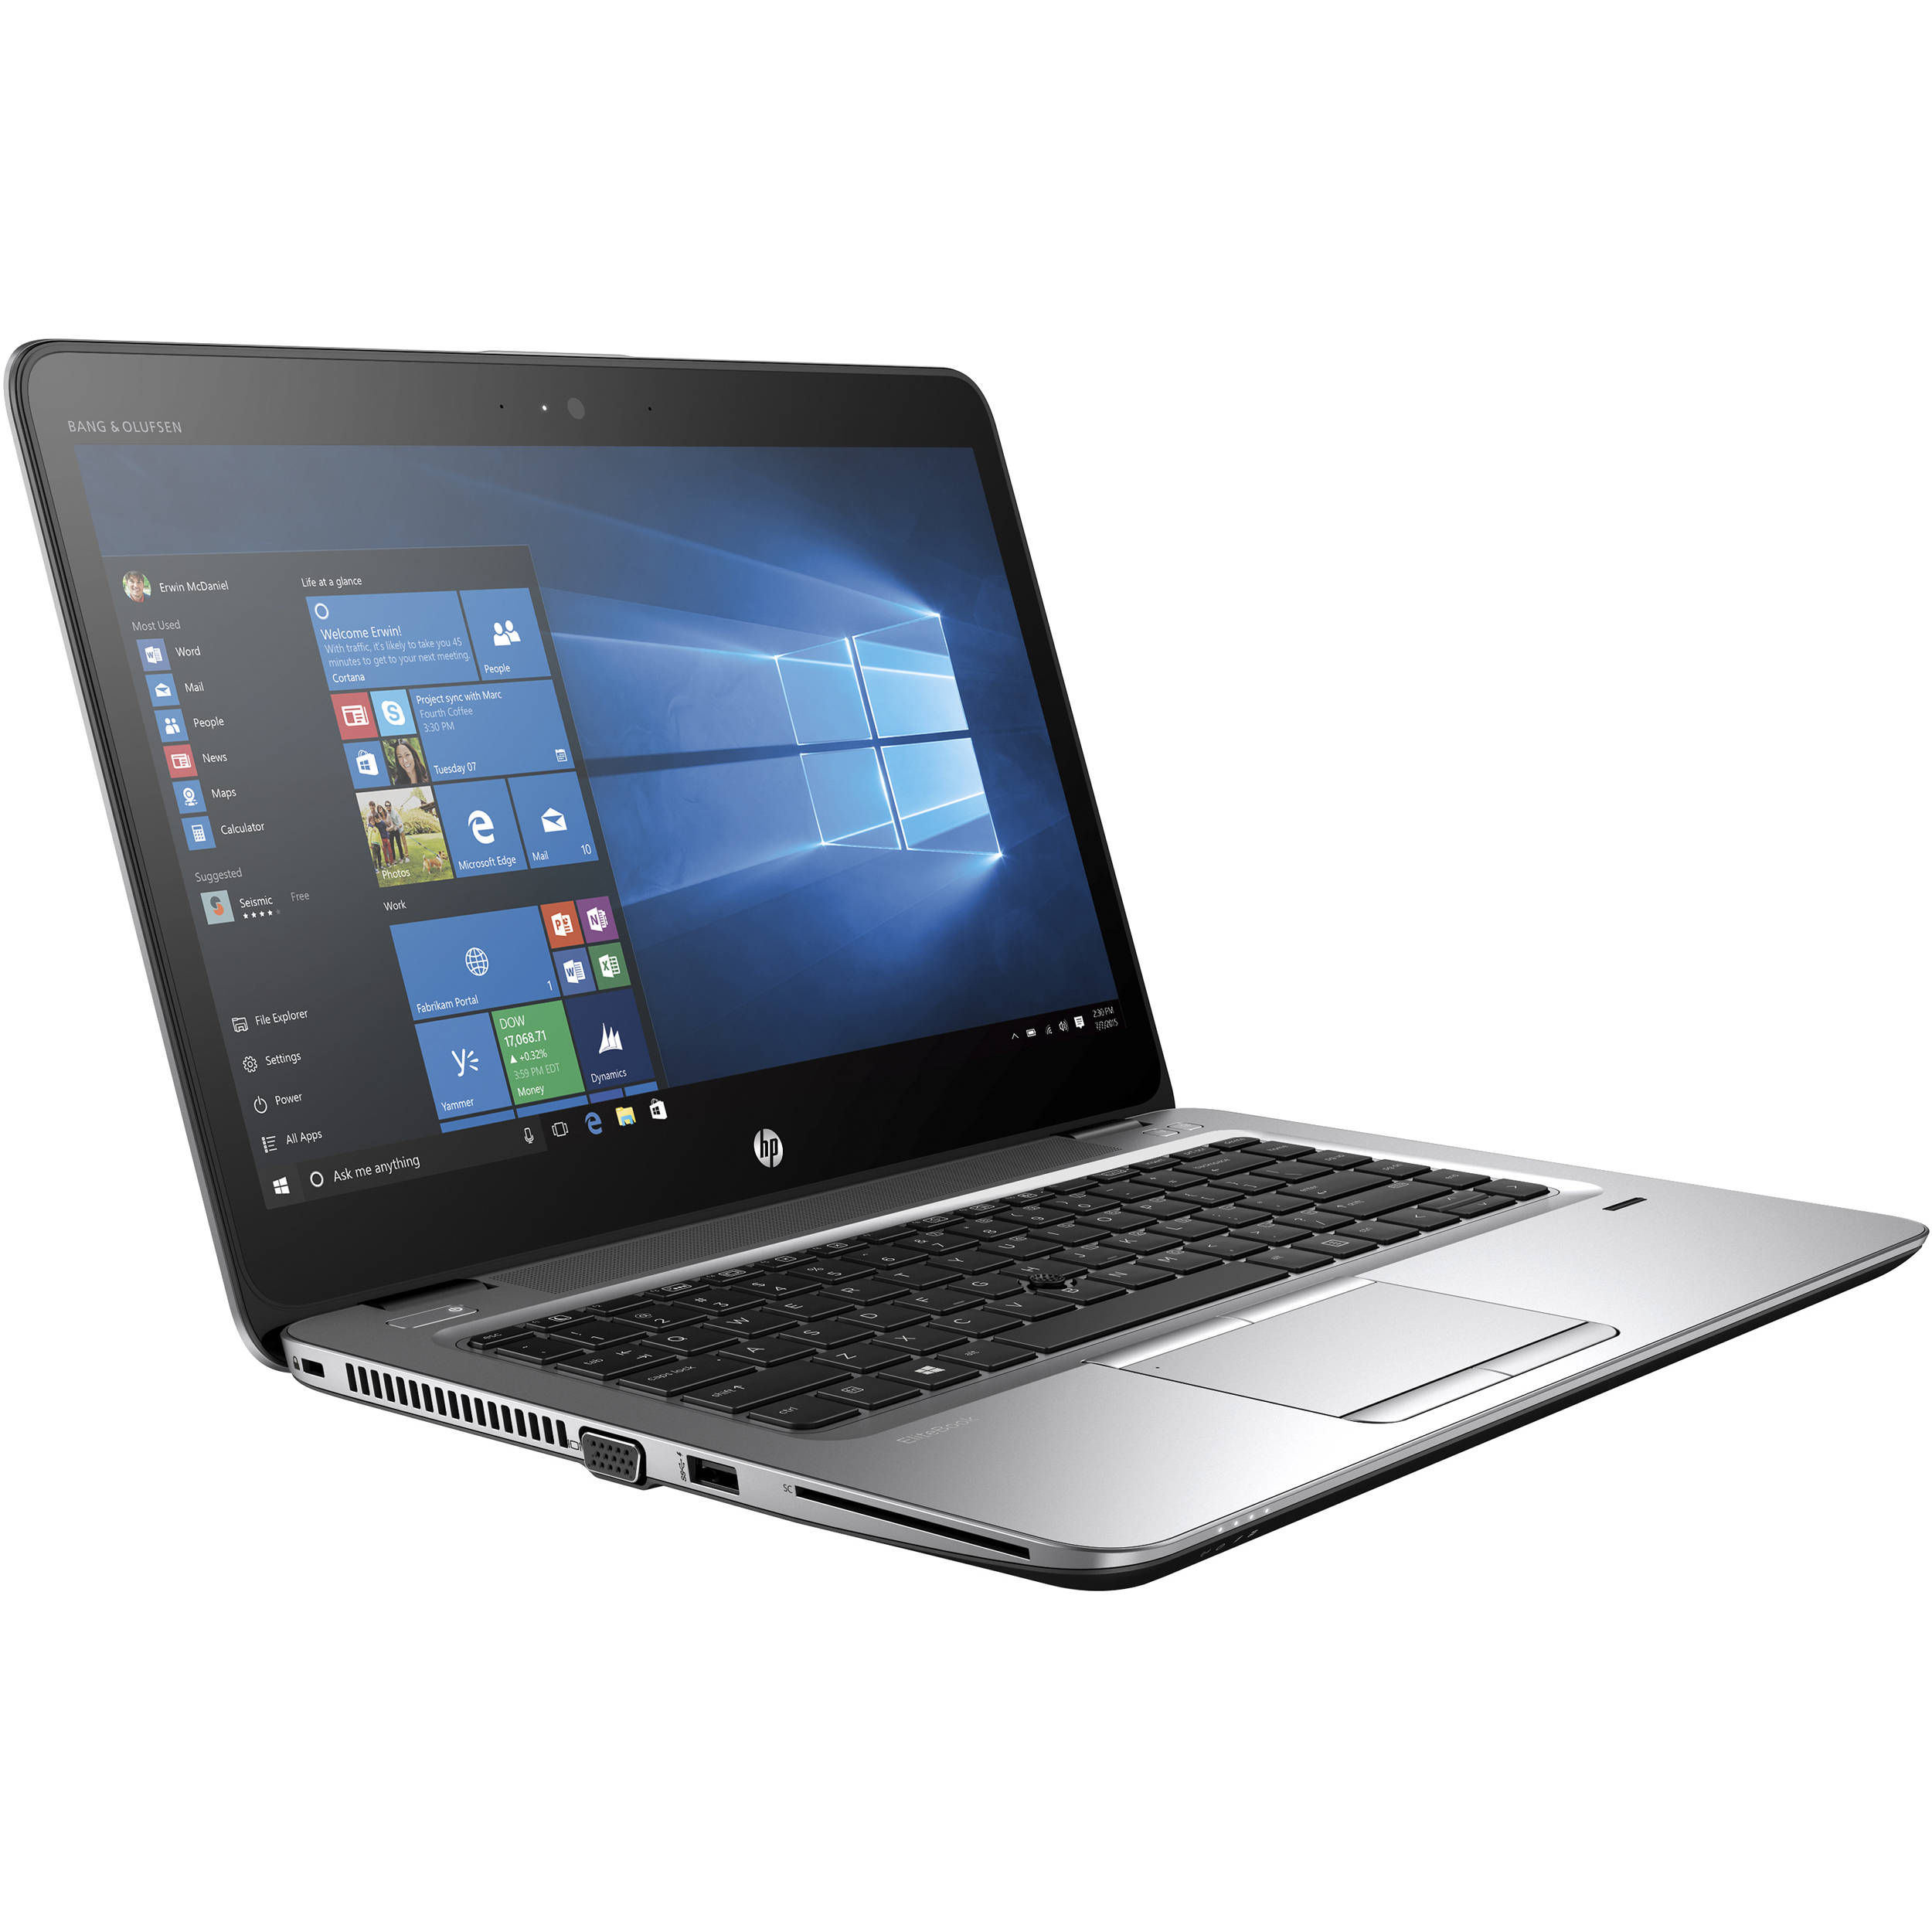 HP EliteBook 840 G3: A-